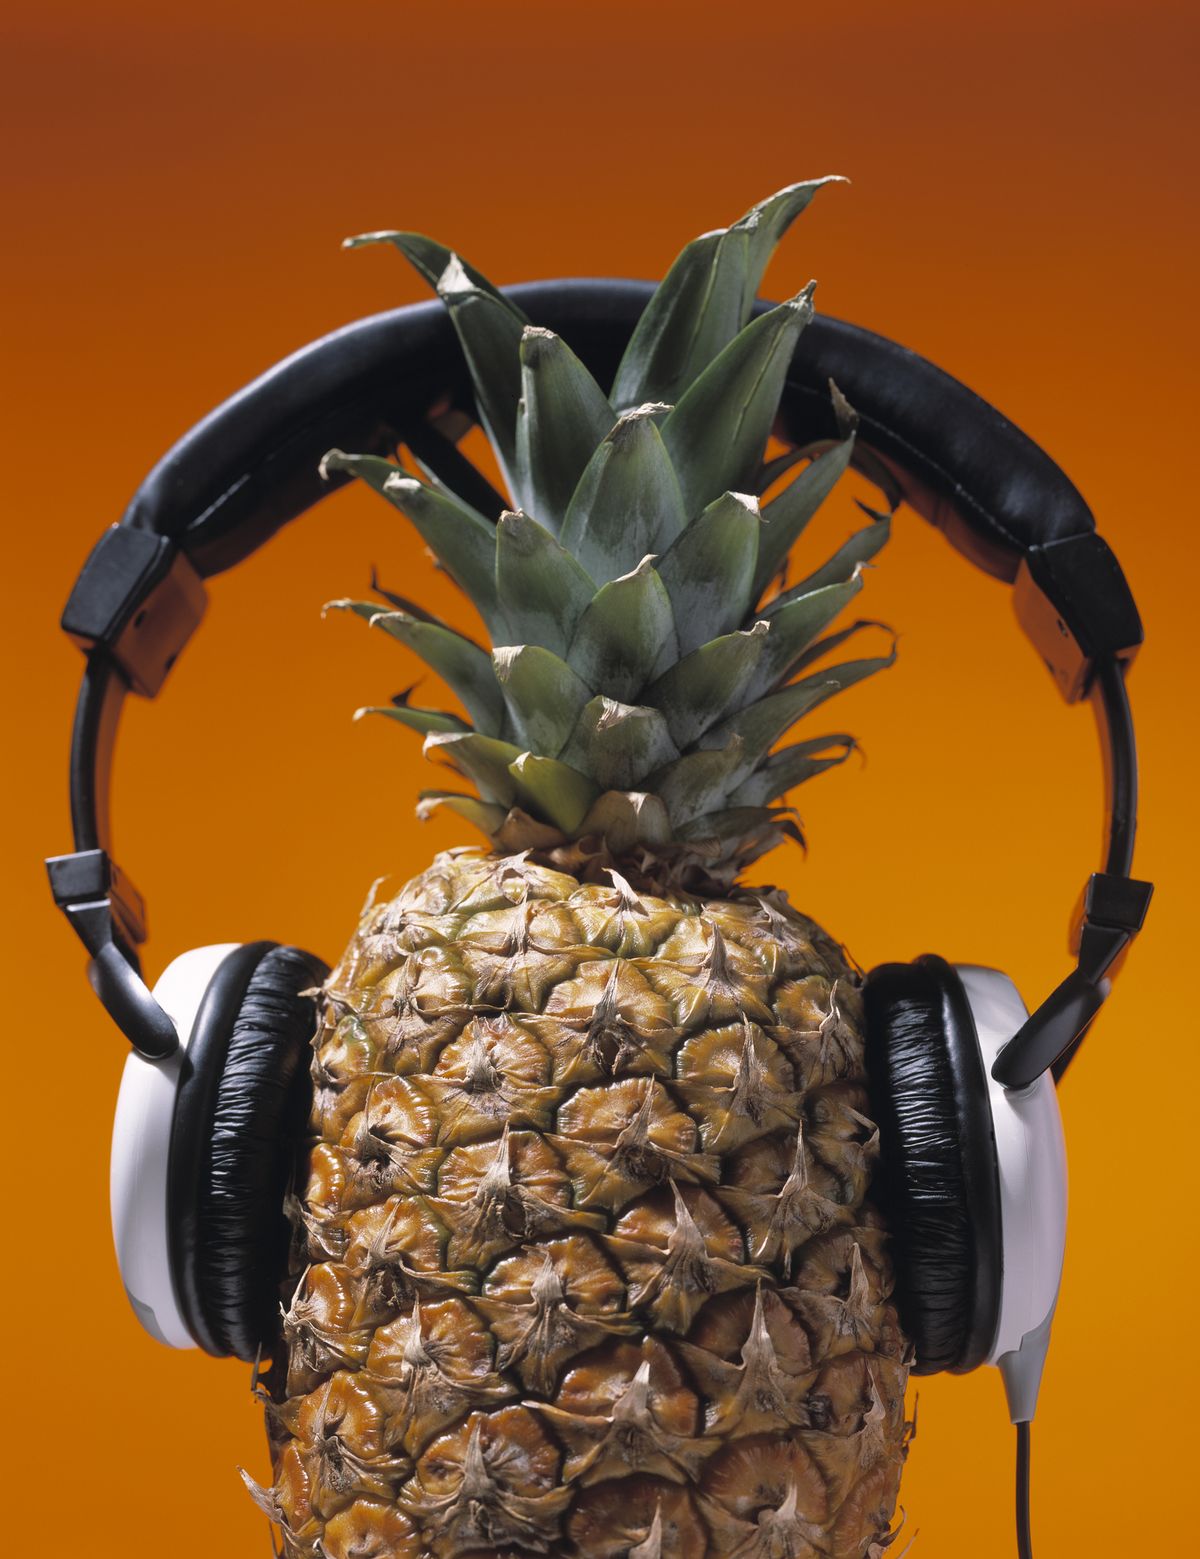 delicious pineapple wearing headphones